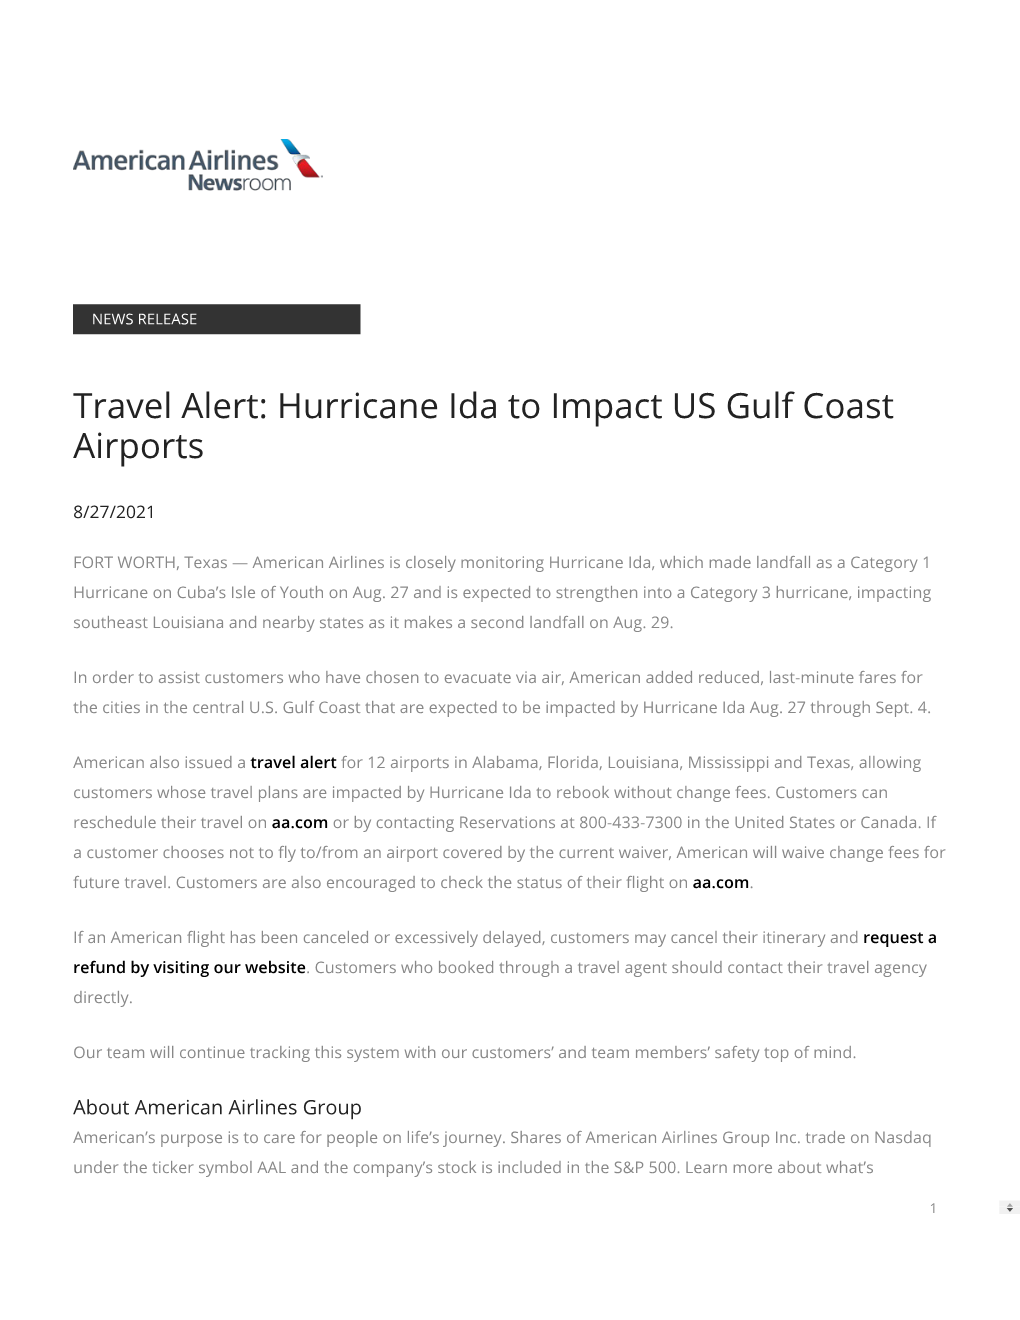 Travel Alert: Hurricane Ida to Impact US Gulf Coast Airports